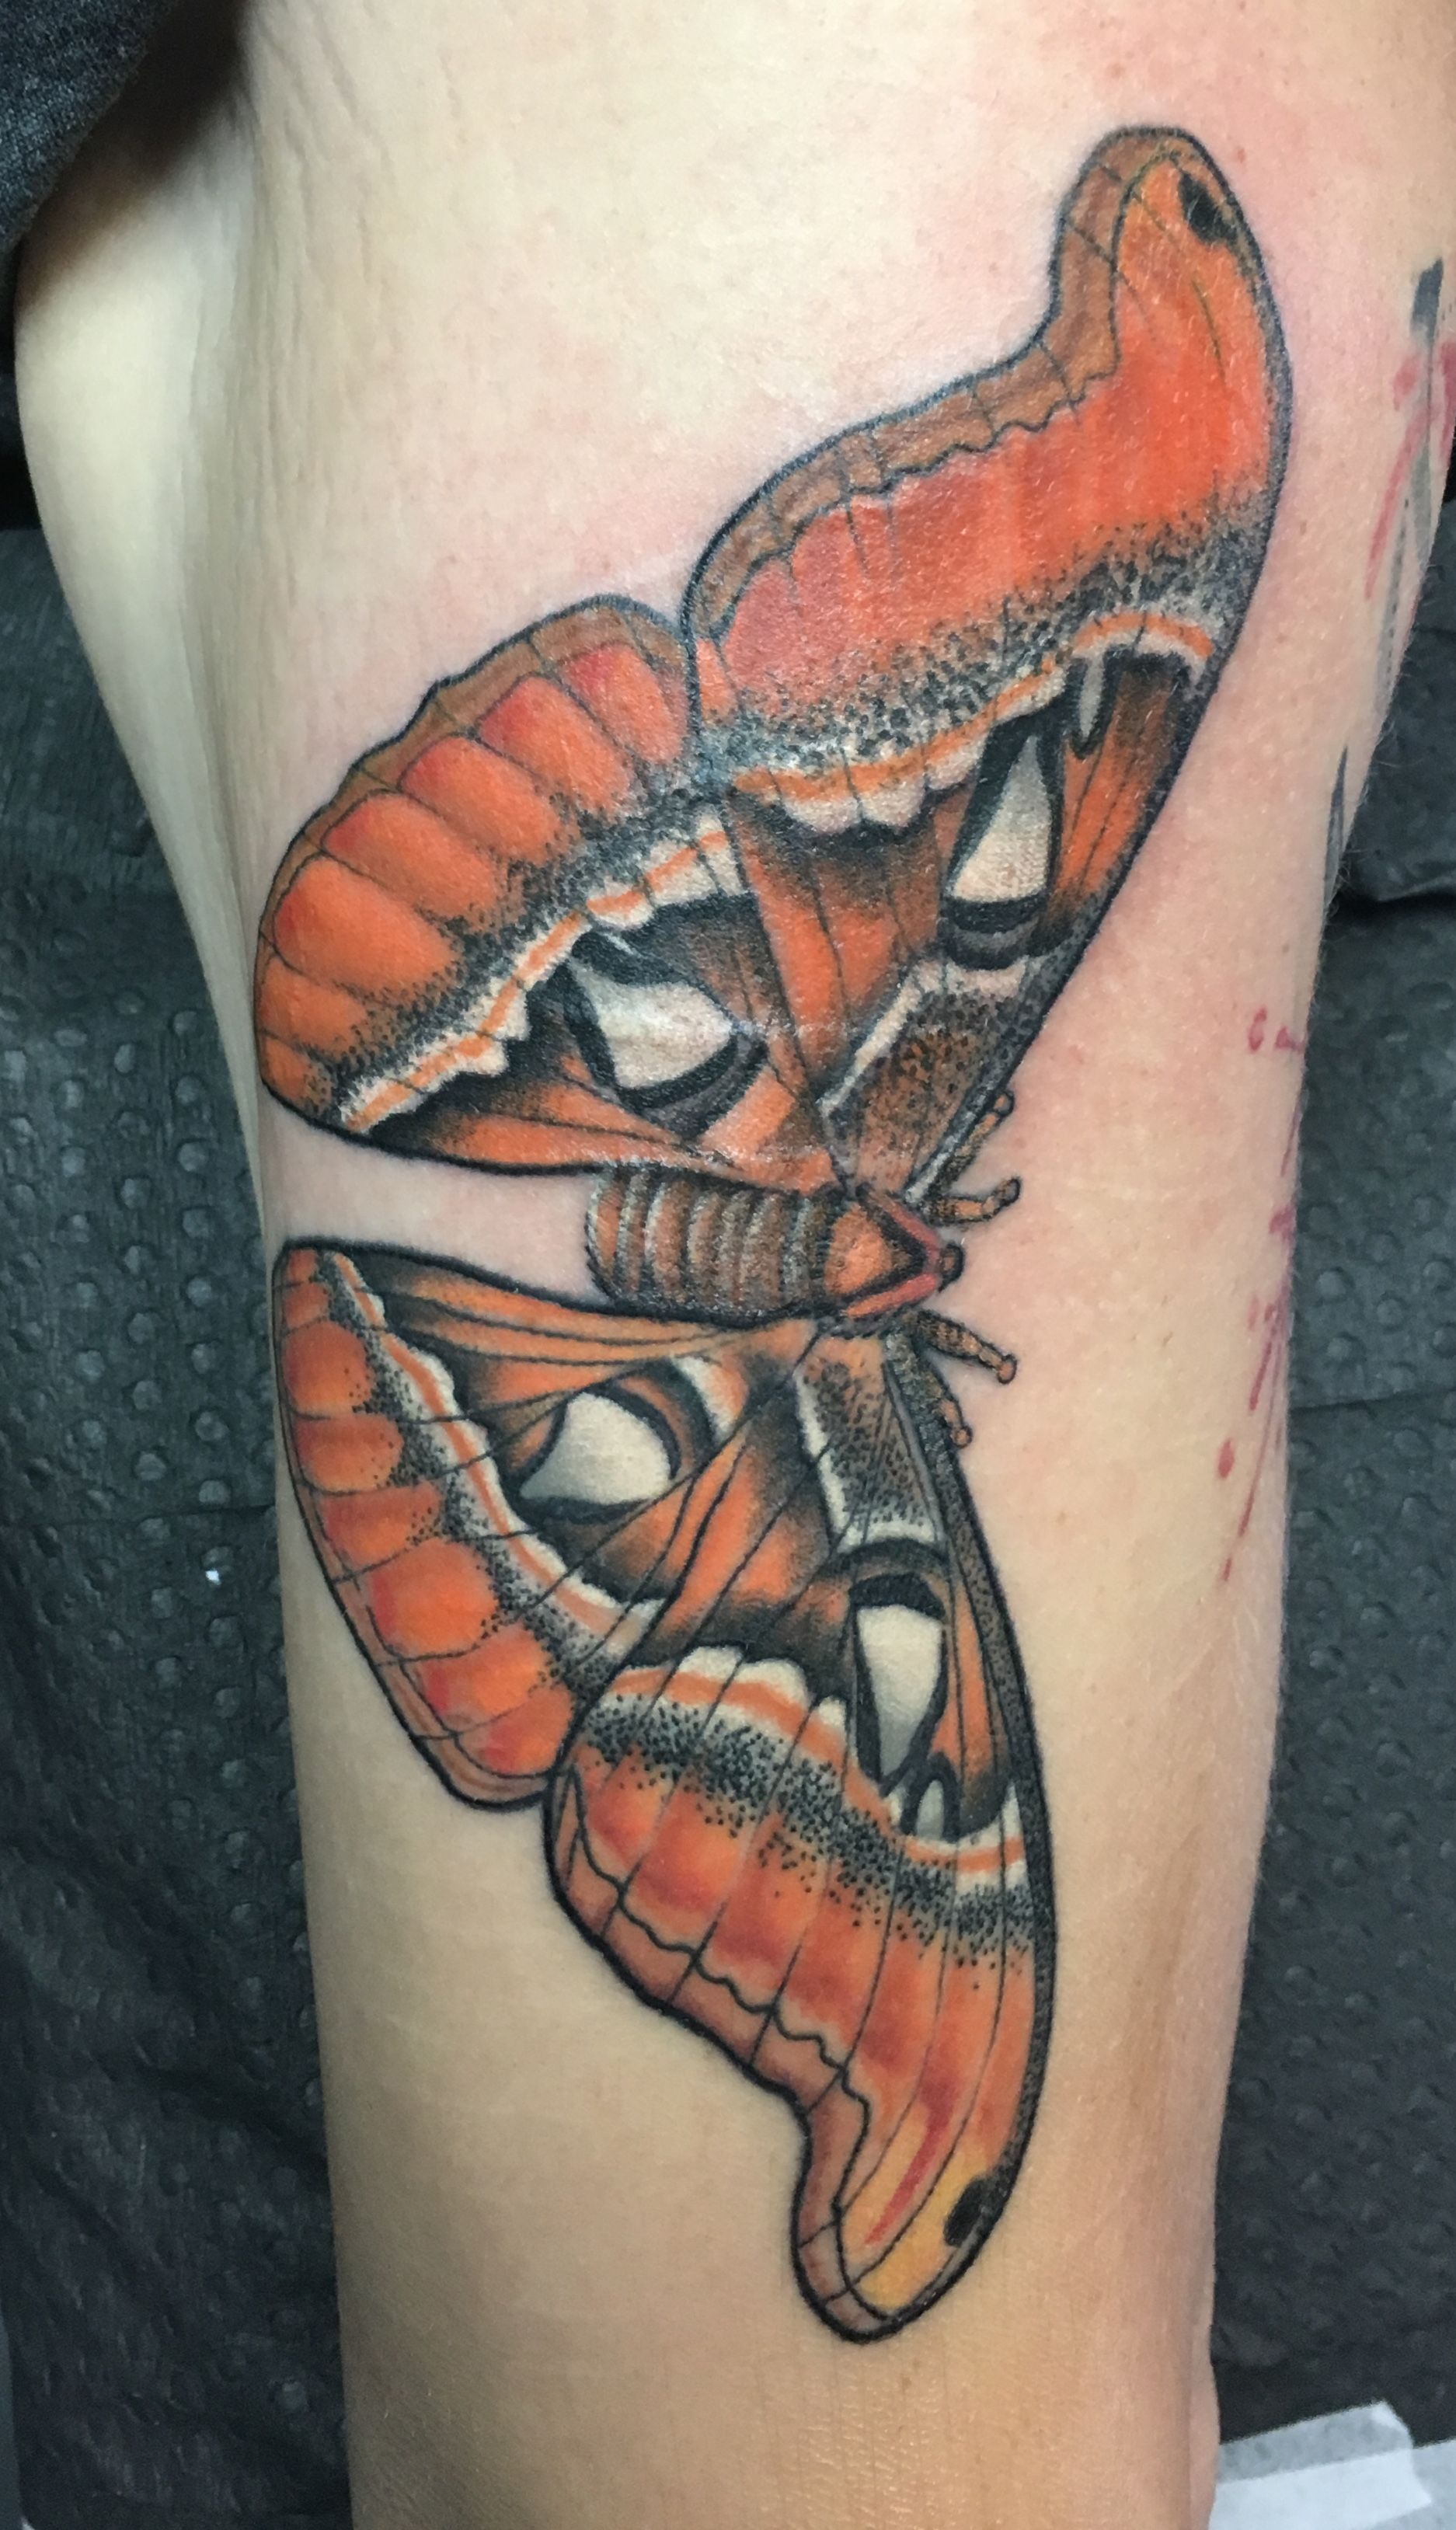 Tattoo uploaded by Shaun Topper  Moth tattoo on the leg tattoooftheday   Tattoodo